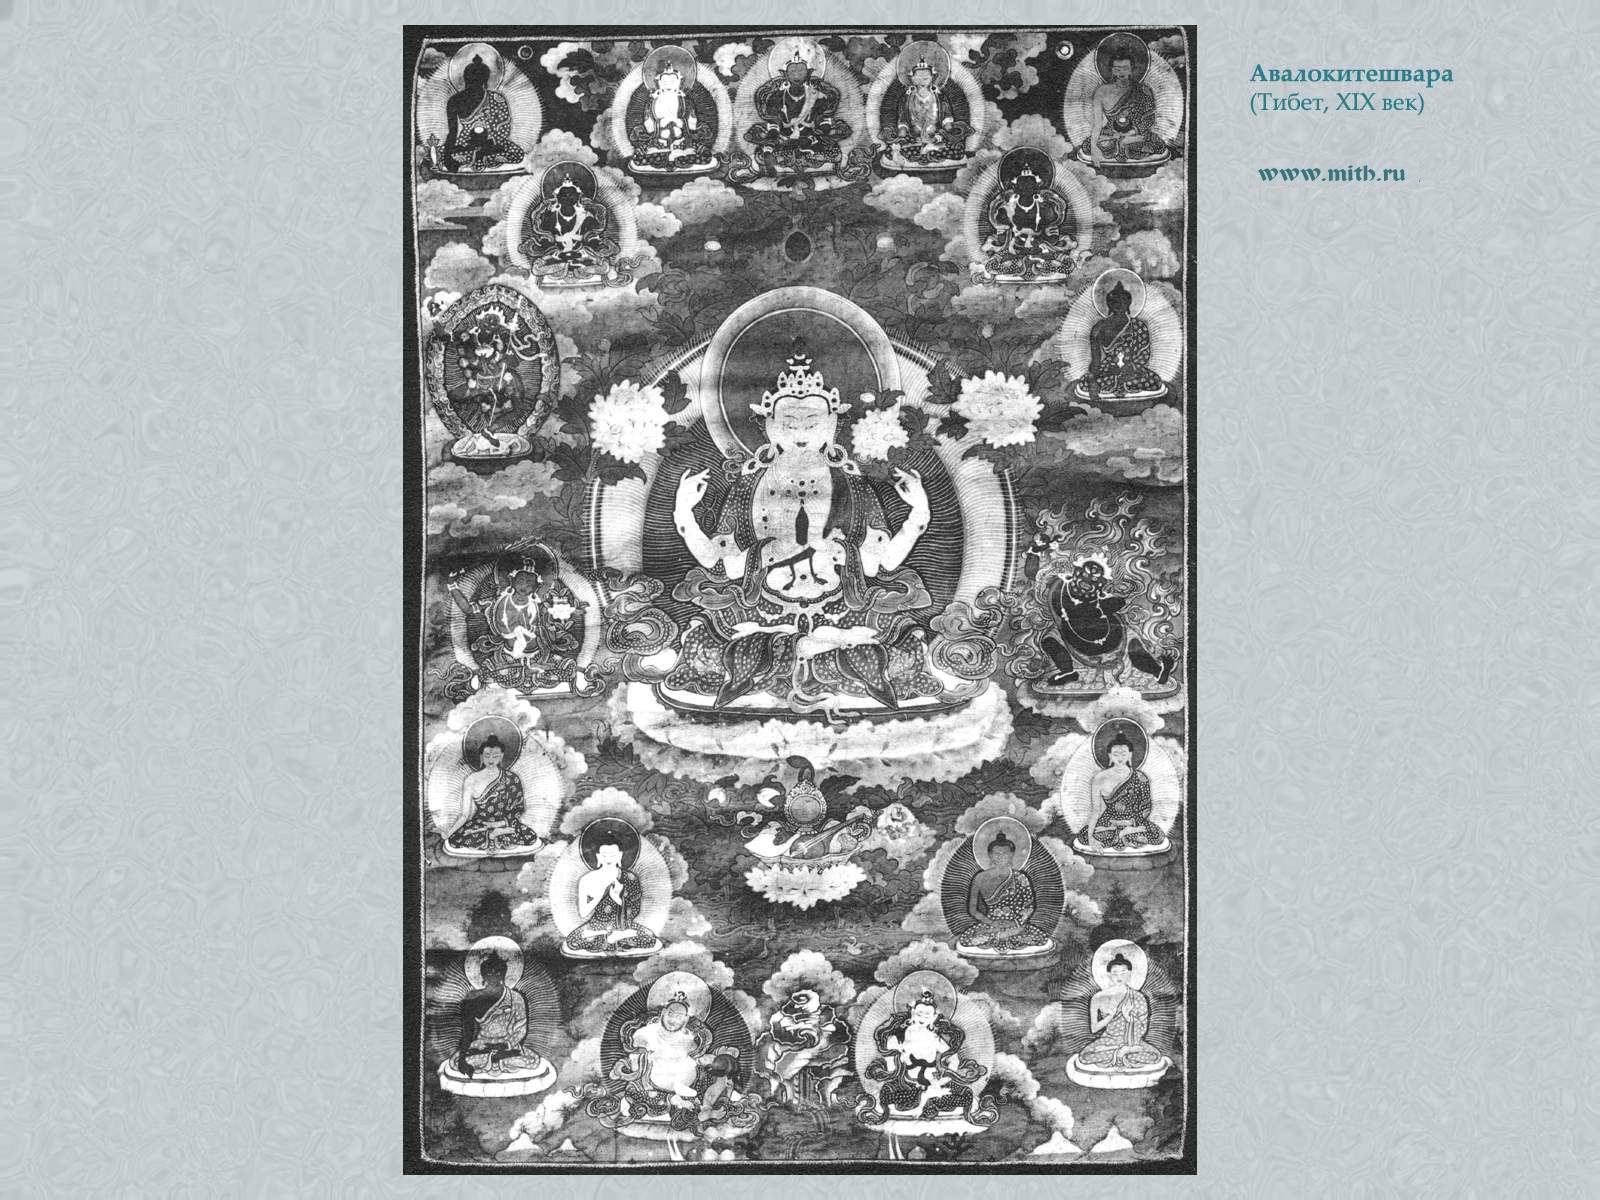 Шадакшари Локешвара, Будда Шакьямуни, будда медицины
Дхьяни-будды: Вайрочана, Акшобхъя, Ратнасамбхава, Амитабха, Амогхасиддхи
дакини Наро, Ваджрапани, Манджушри

перейти к книге 'Тибетская живопись'